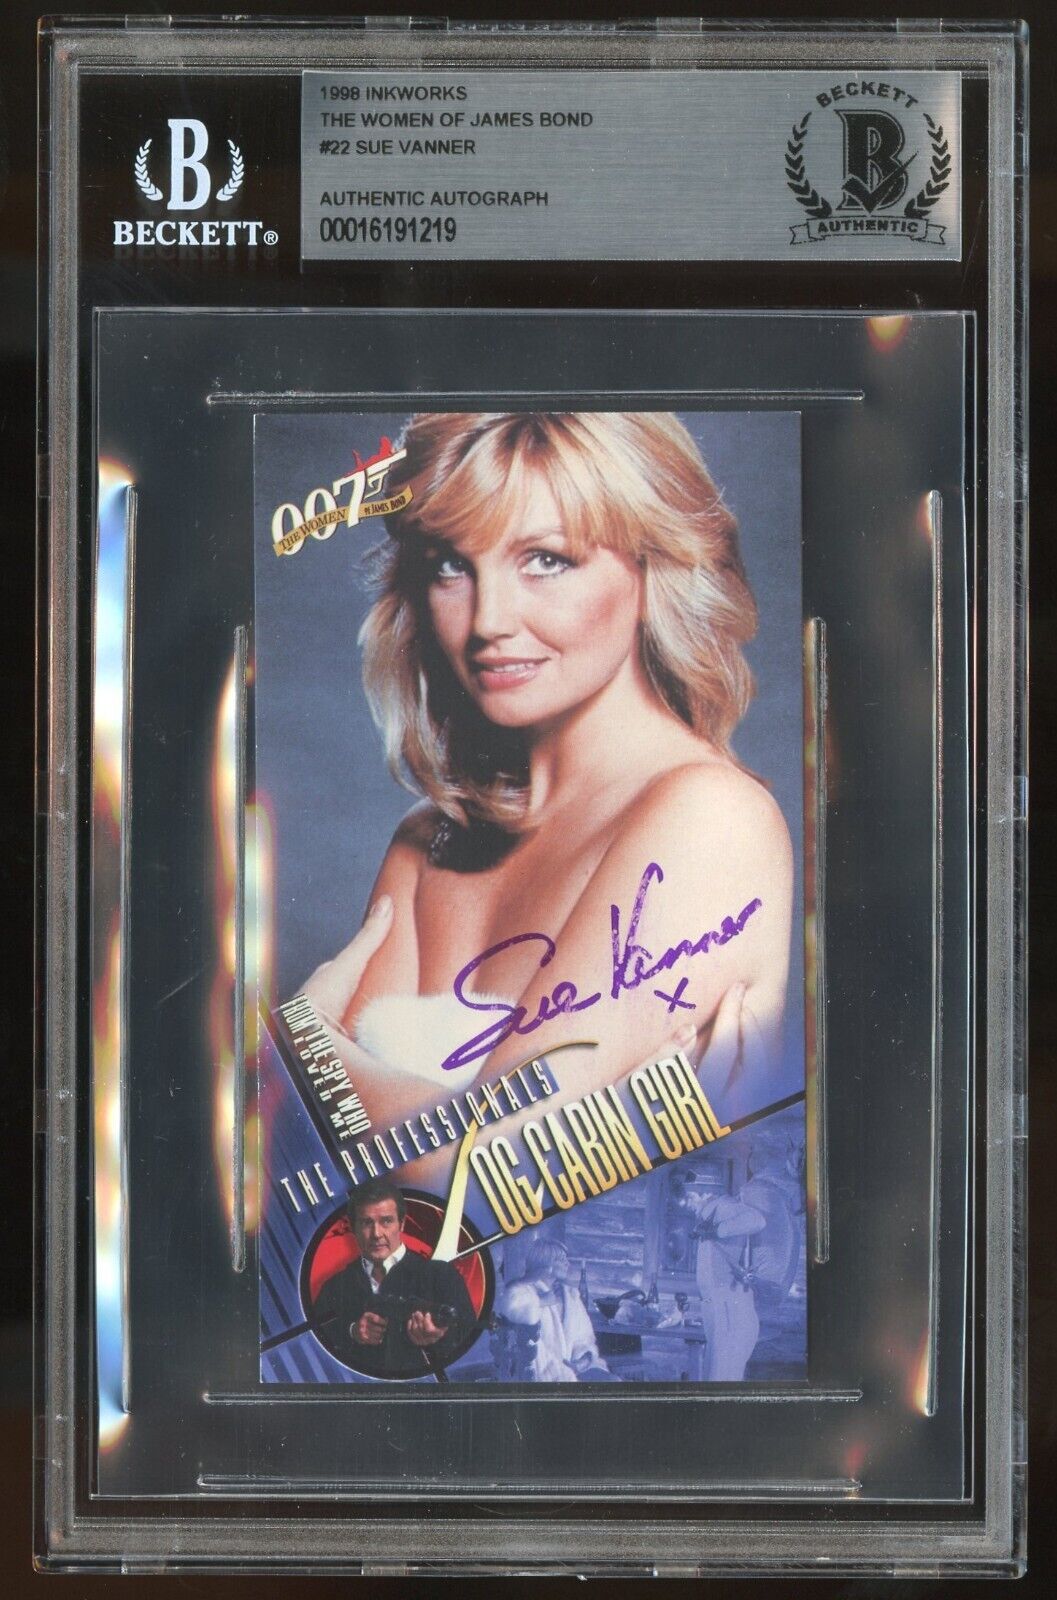 Sue Vanner #22 signed autograph 1998 Inkworks Actress The Women of J. Bond BAS